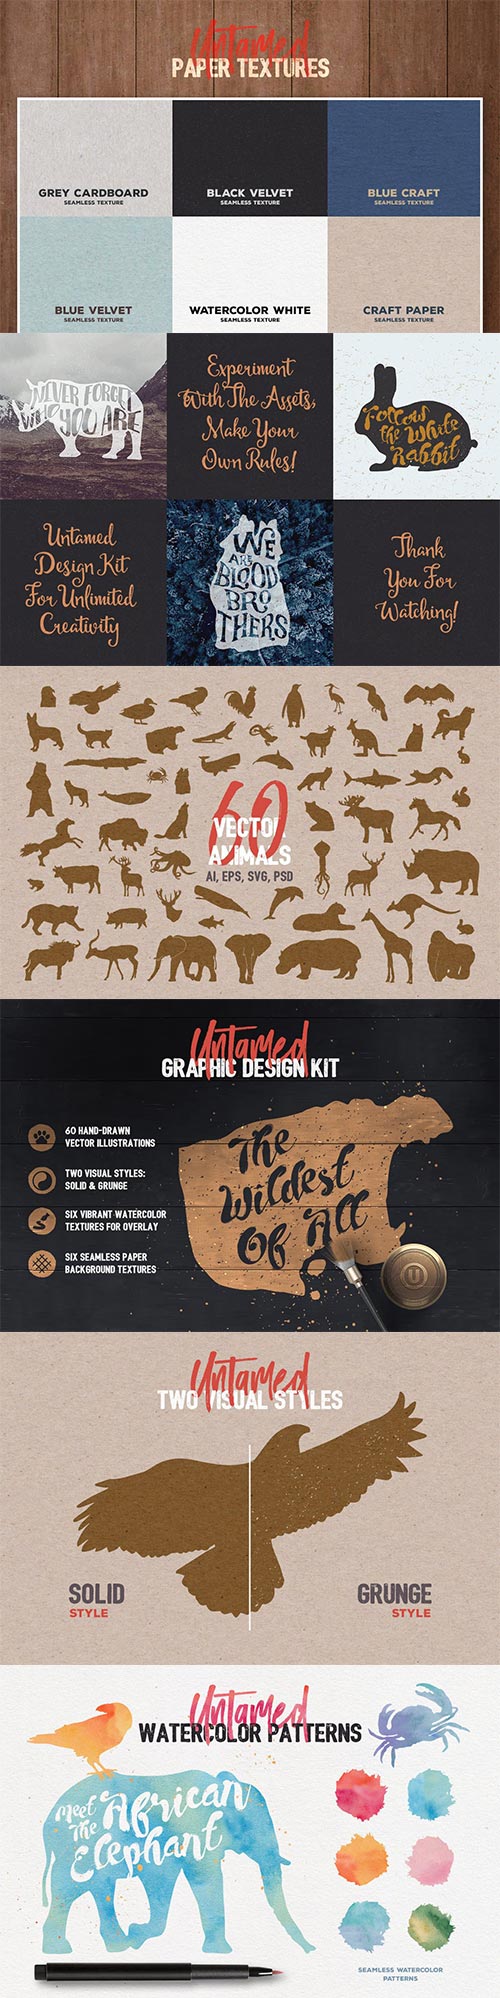 Untamed Graphic Design Kit